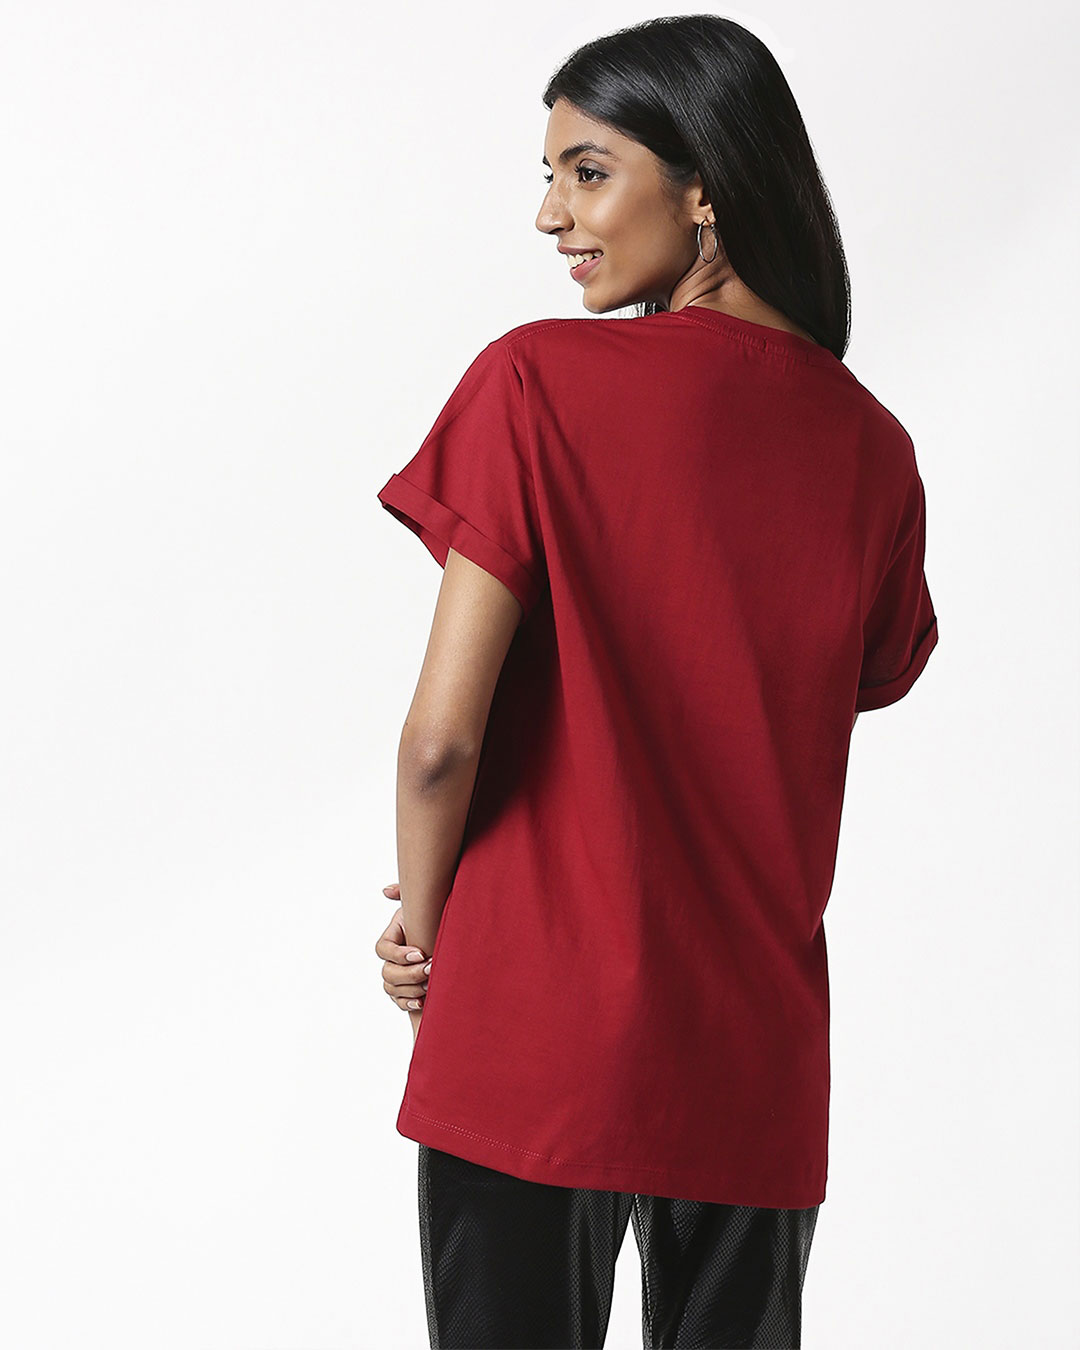 Shop Namaste But Boyfriend T-Shirt Cherry Red-Back